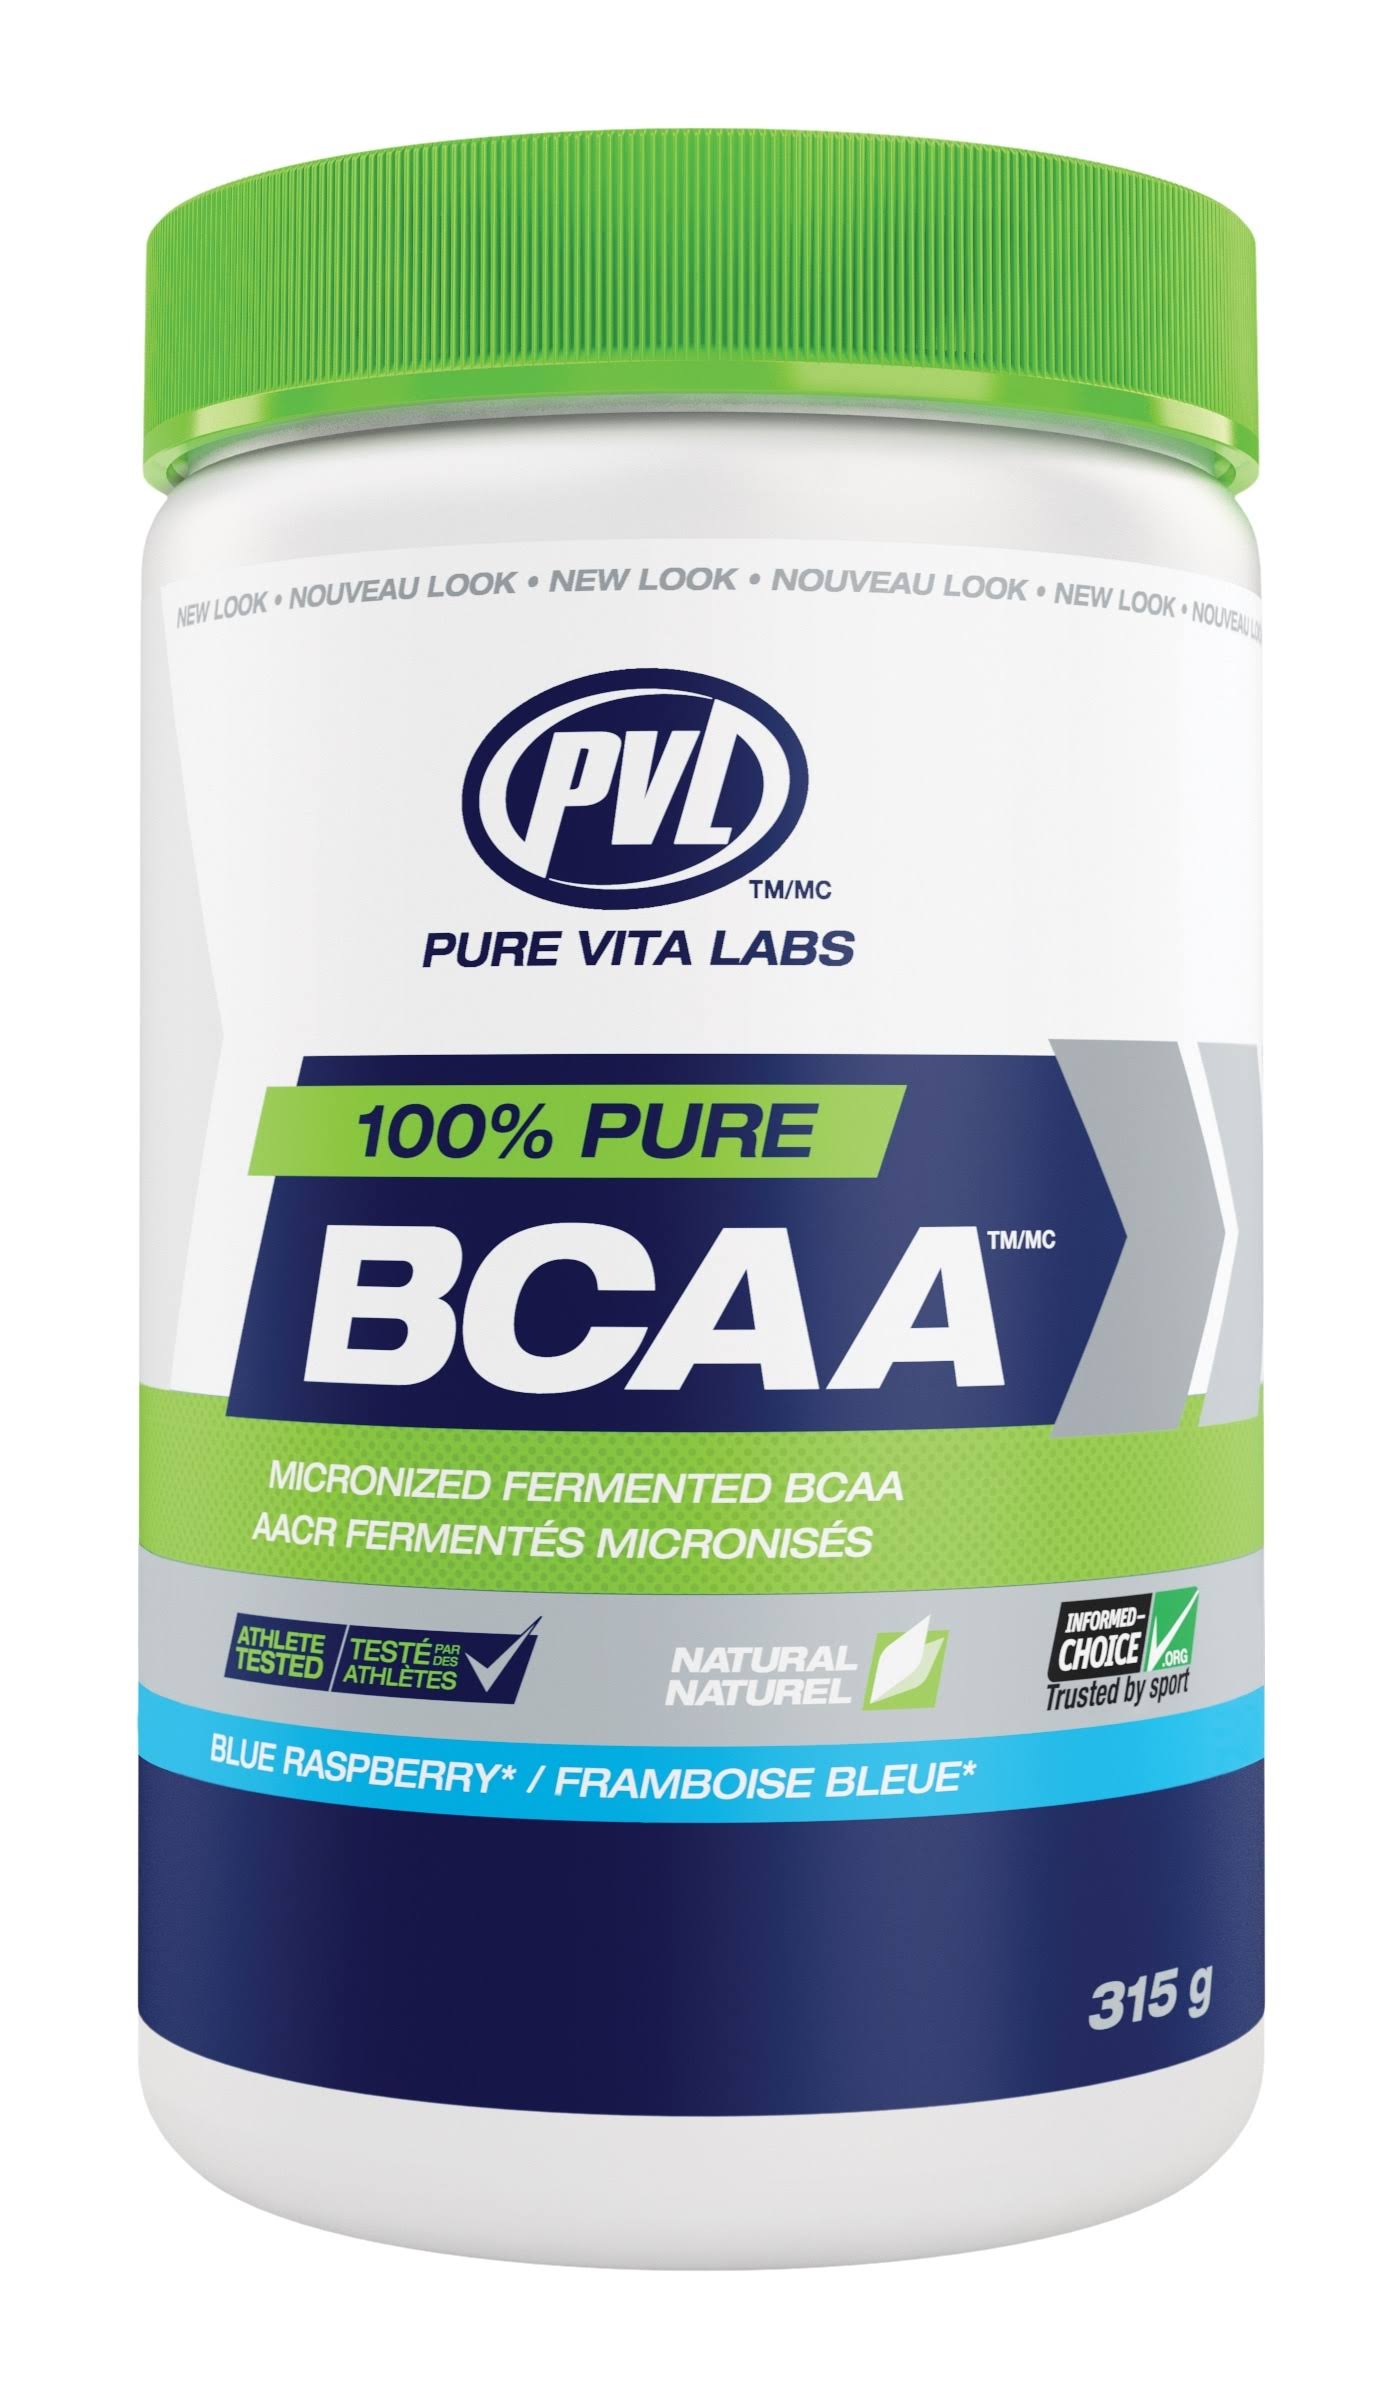 PVL 100% Pure BCAA - Blue Raspberry, 300g